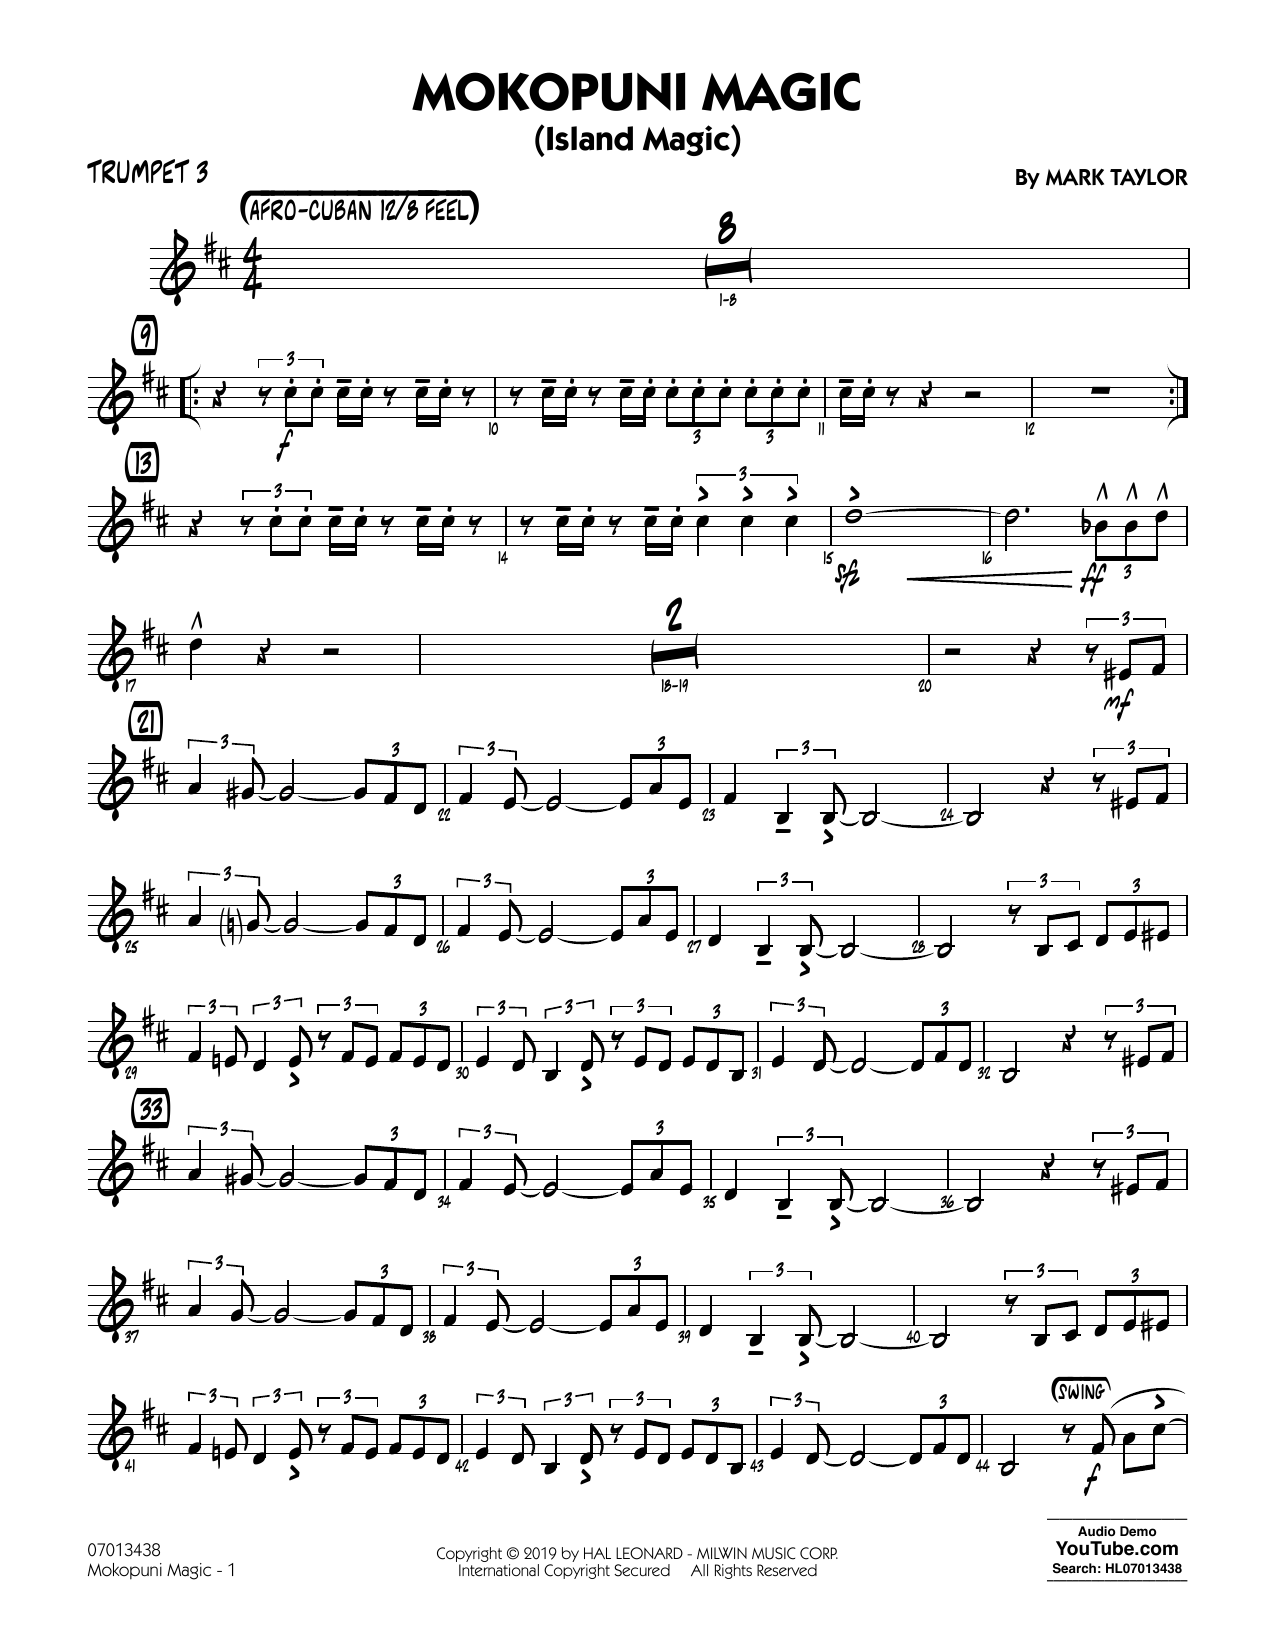 Mark Taylor Mokopuni Magic (Island Magic) - Trumpet 3 Sheet Music Notes & Chords for Jazz Ensemble - Download or Print PDF